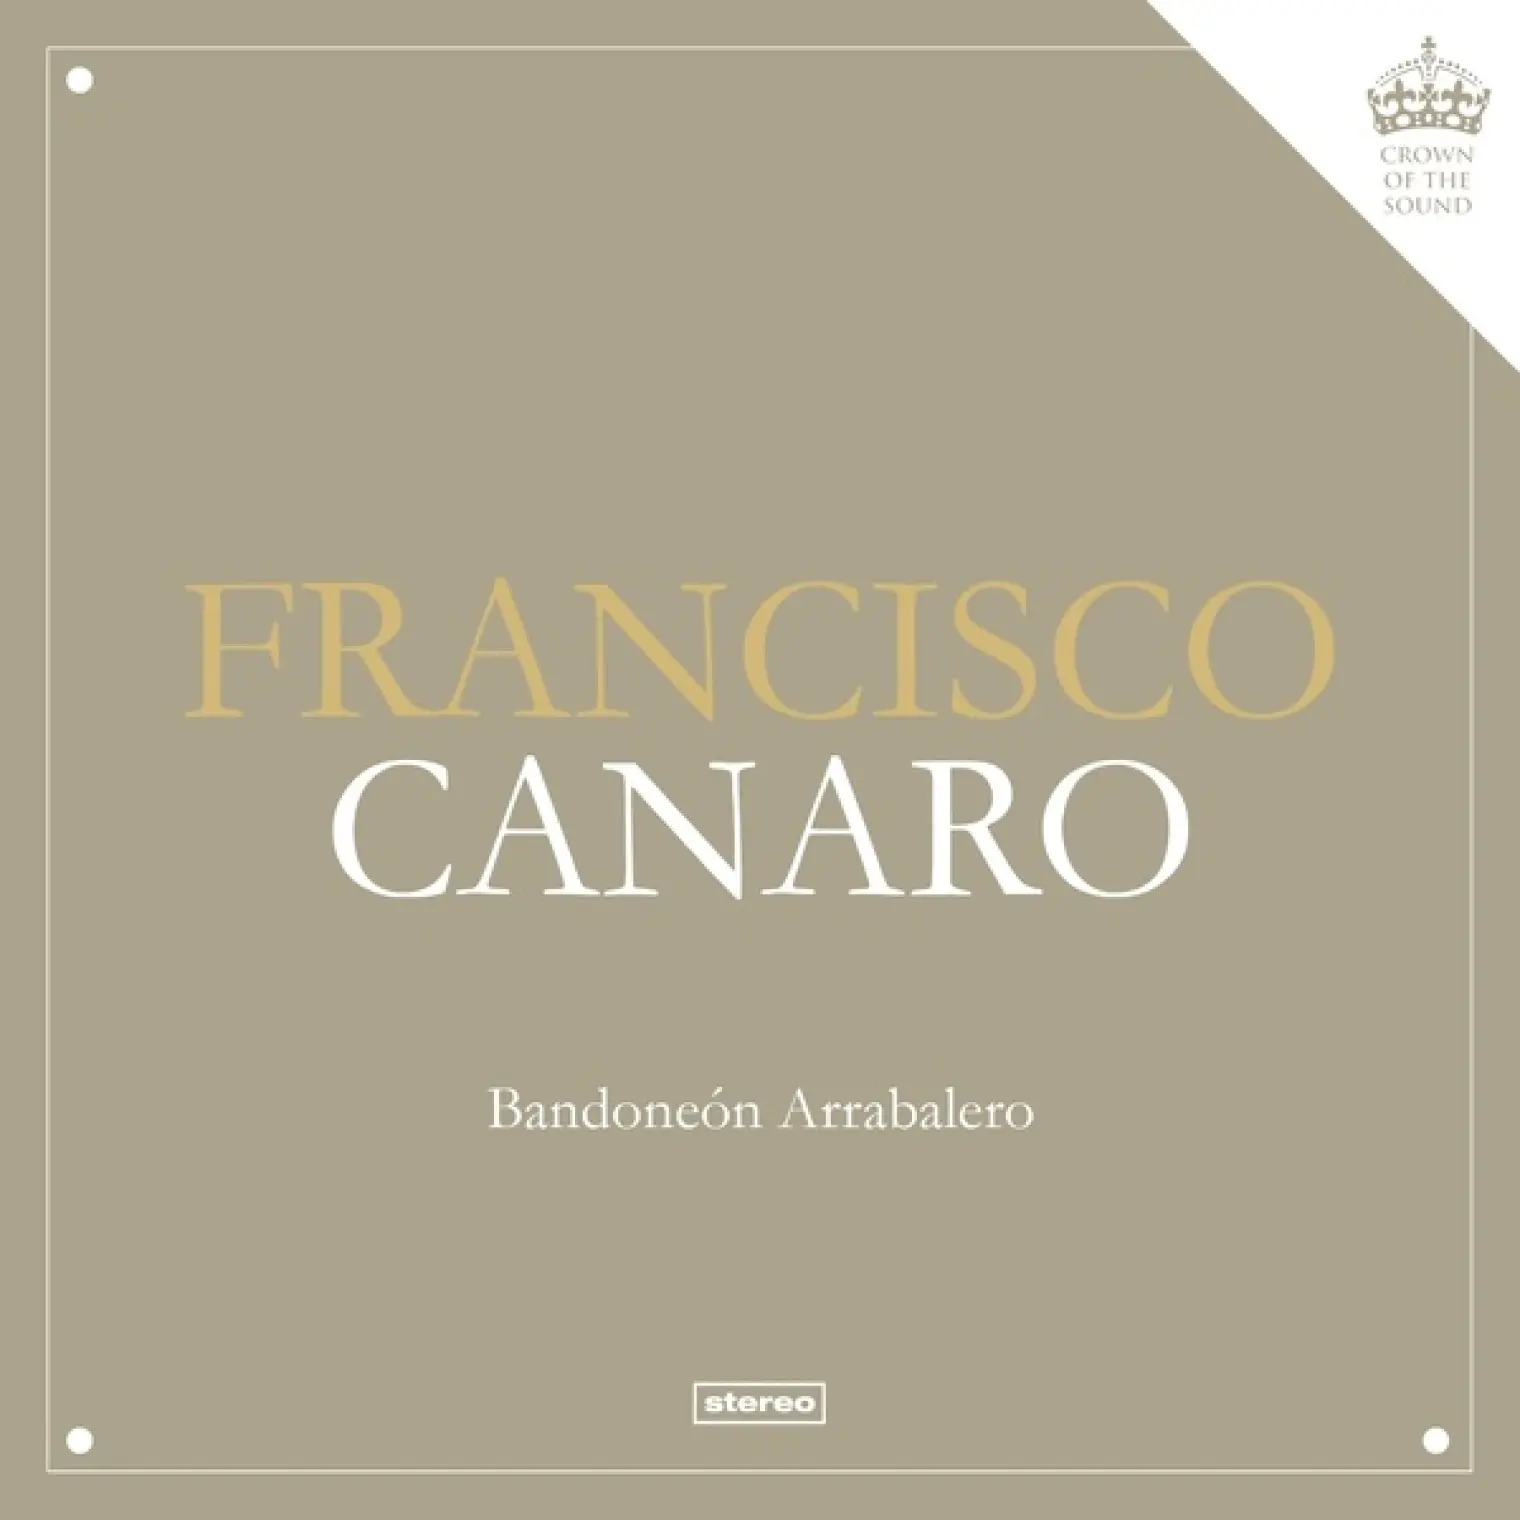 Bandoneón Arrabalero -  Francisco Canaro 